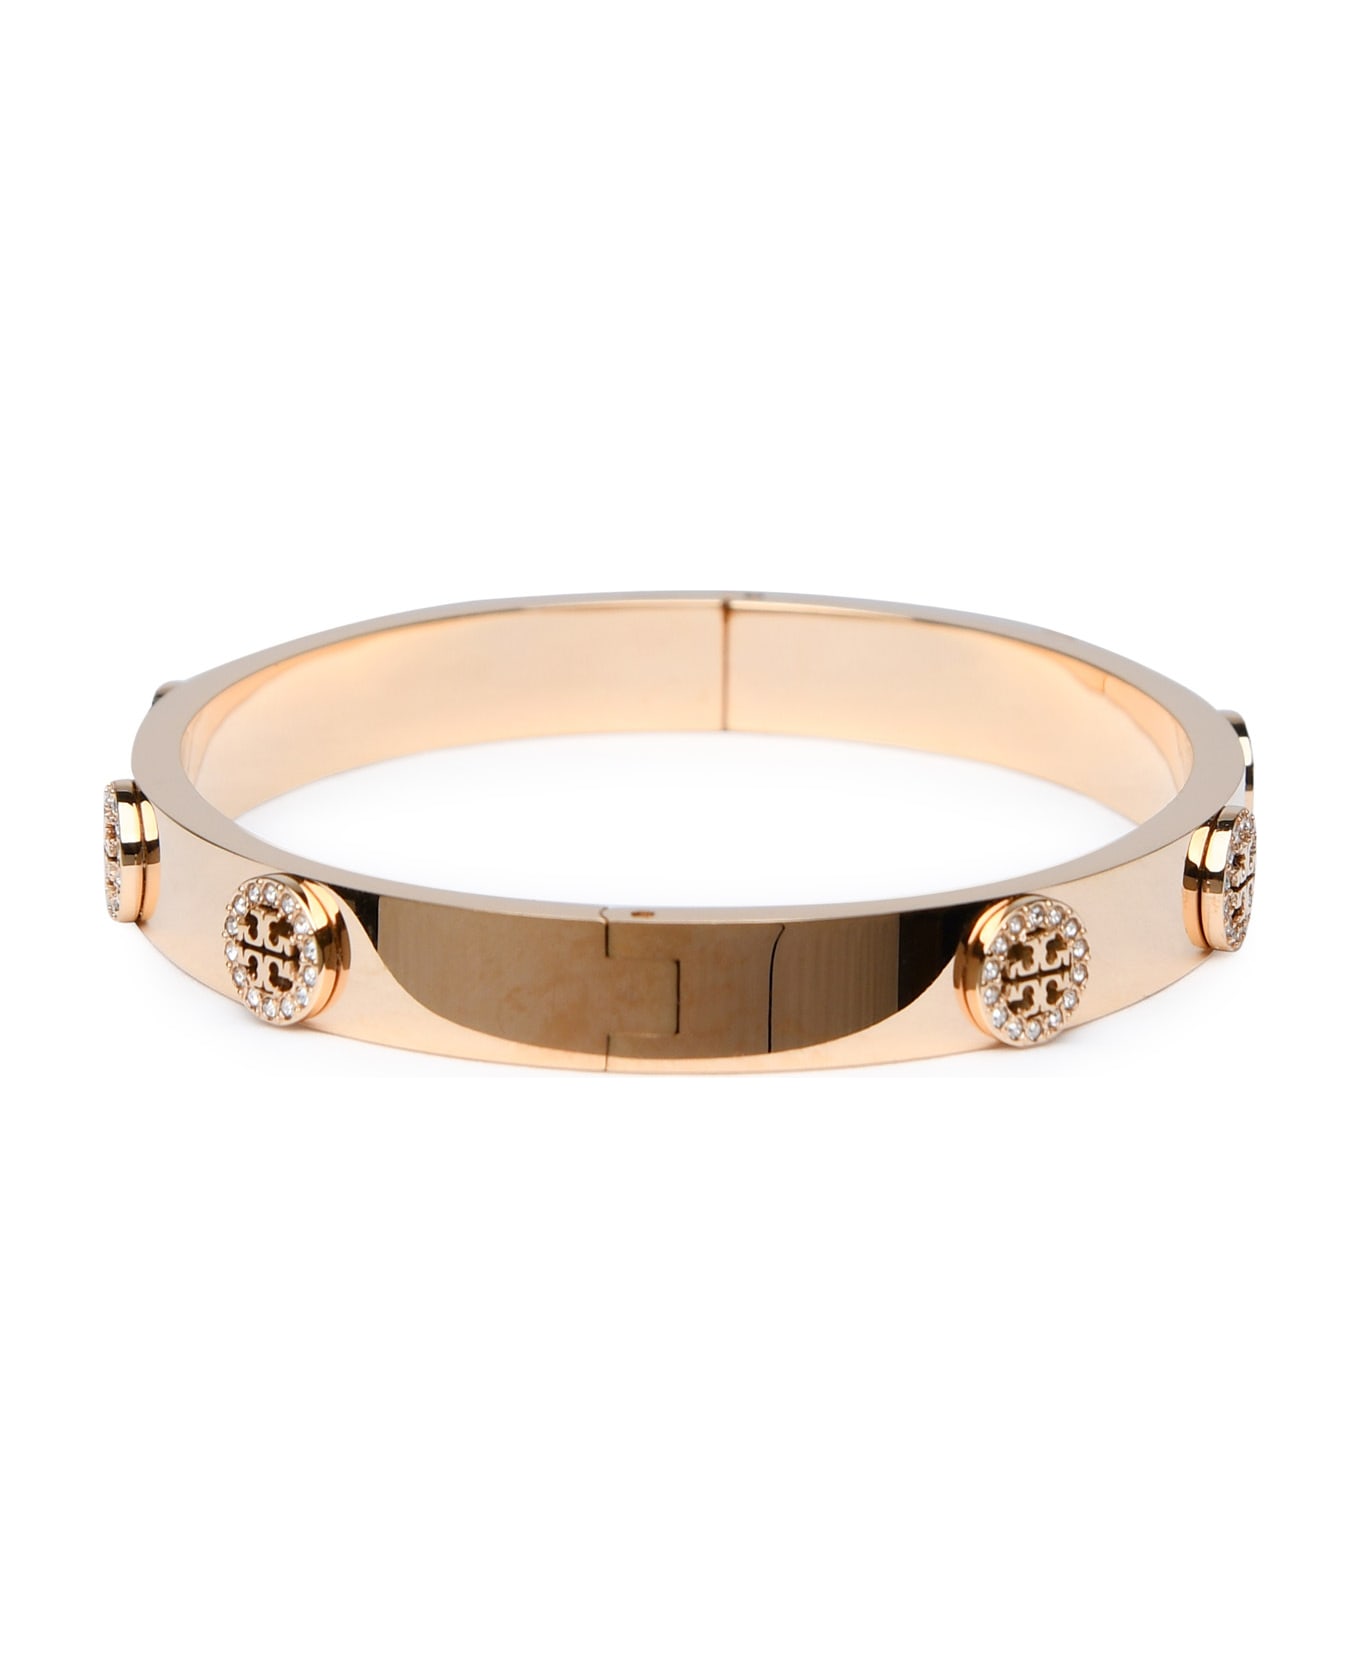 Tory Burch 'miller' Gold Steel Bracelet - Gold